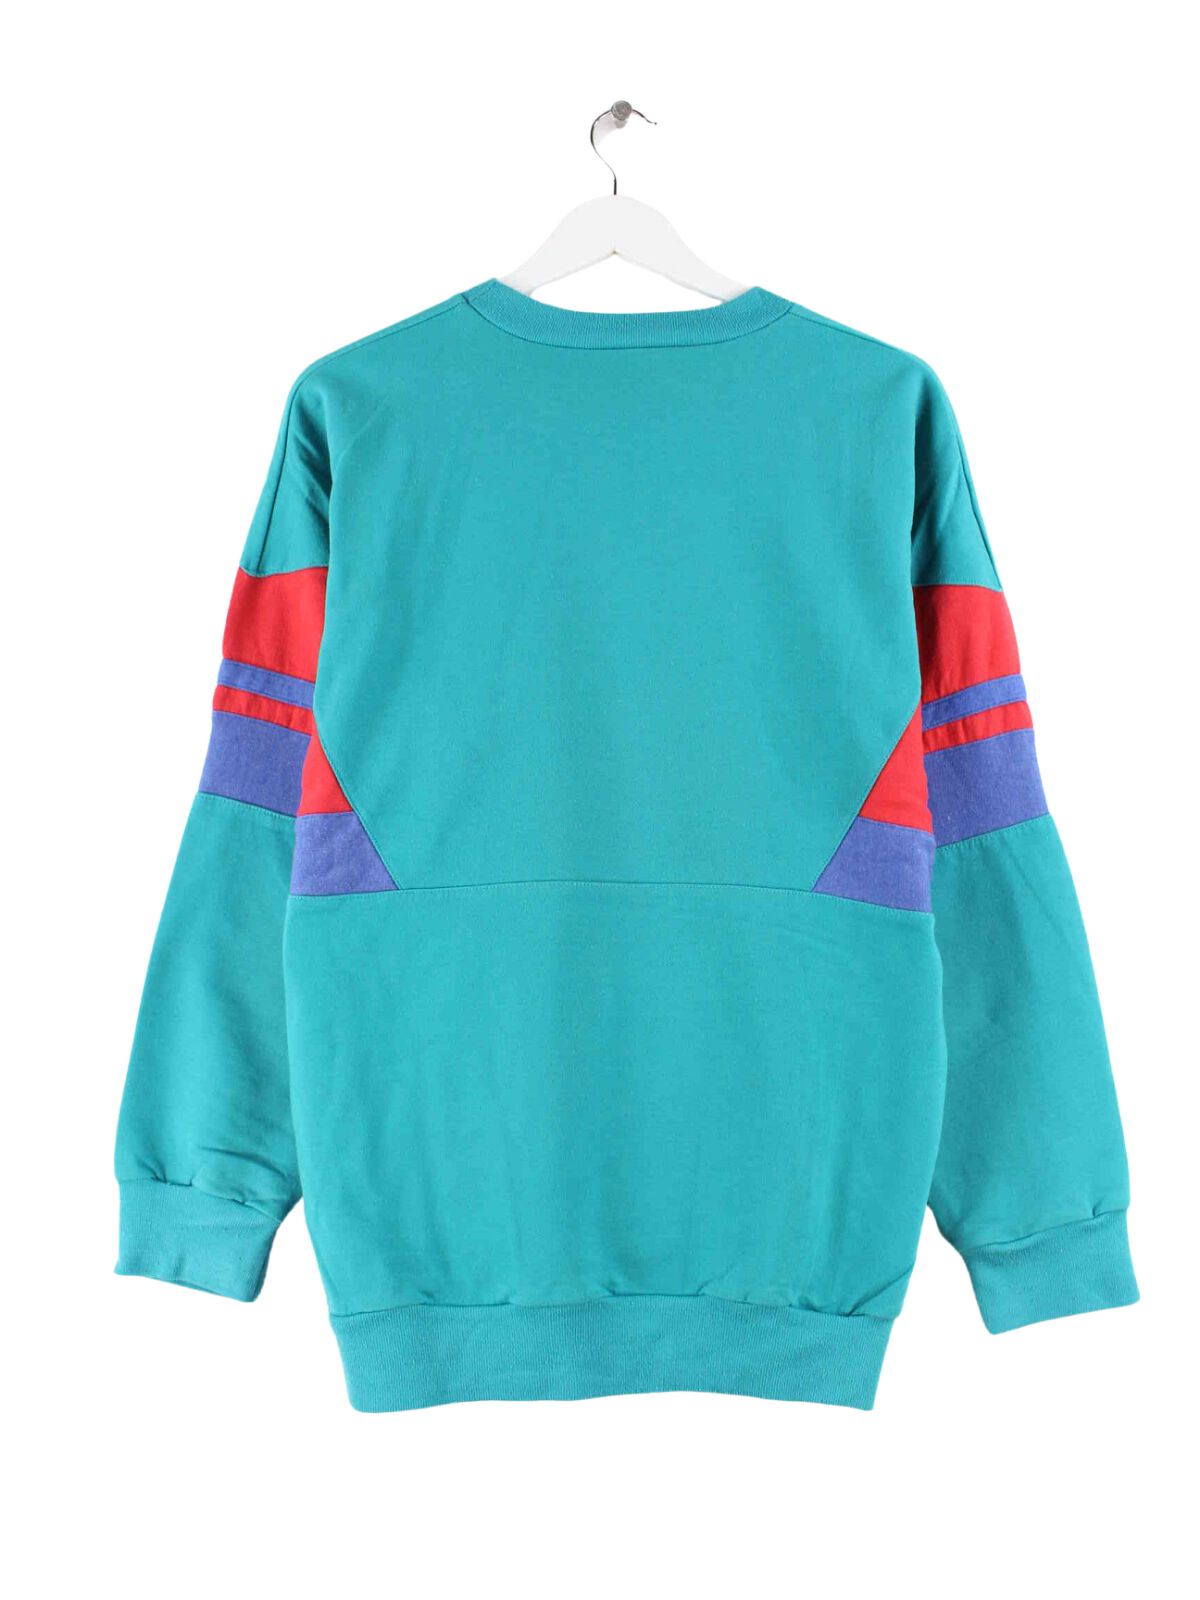 Adidas 80s Vintage Sweater Türkis XL